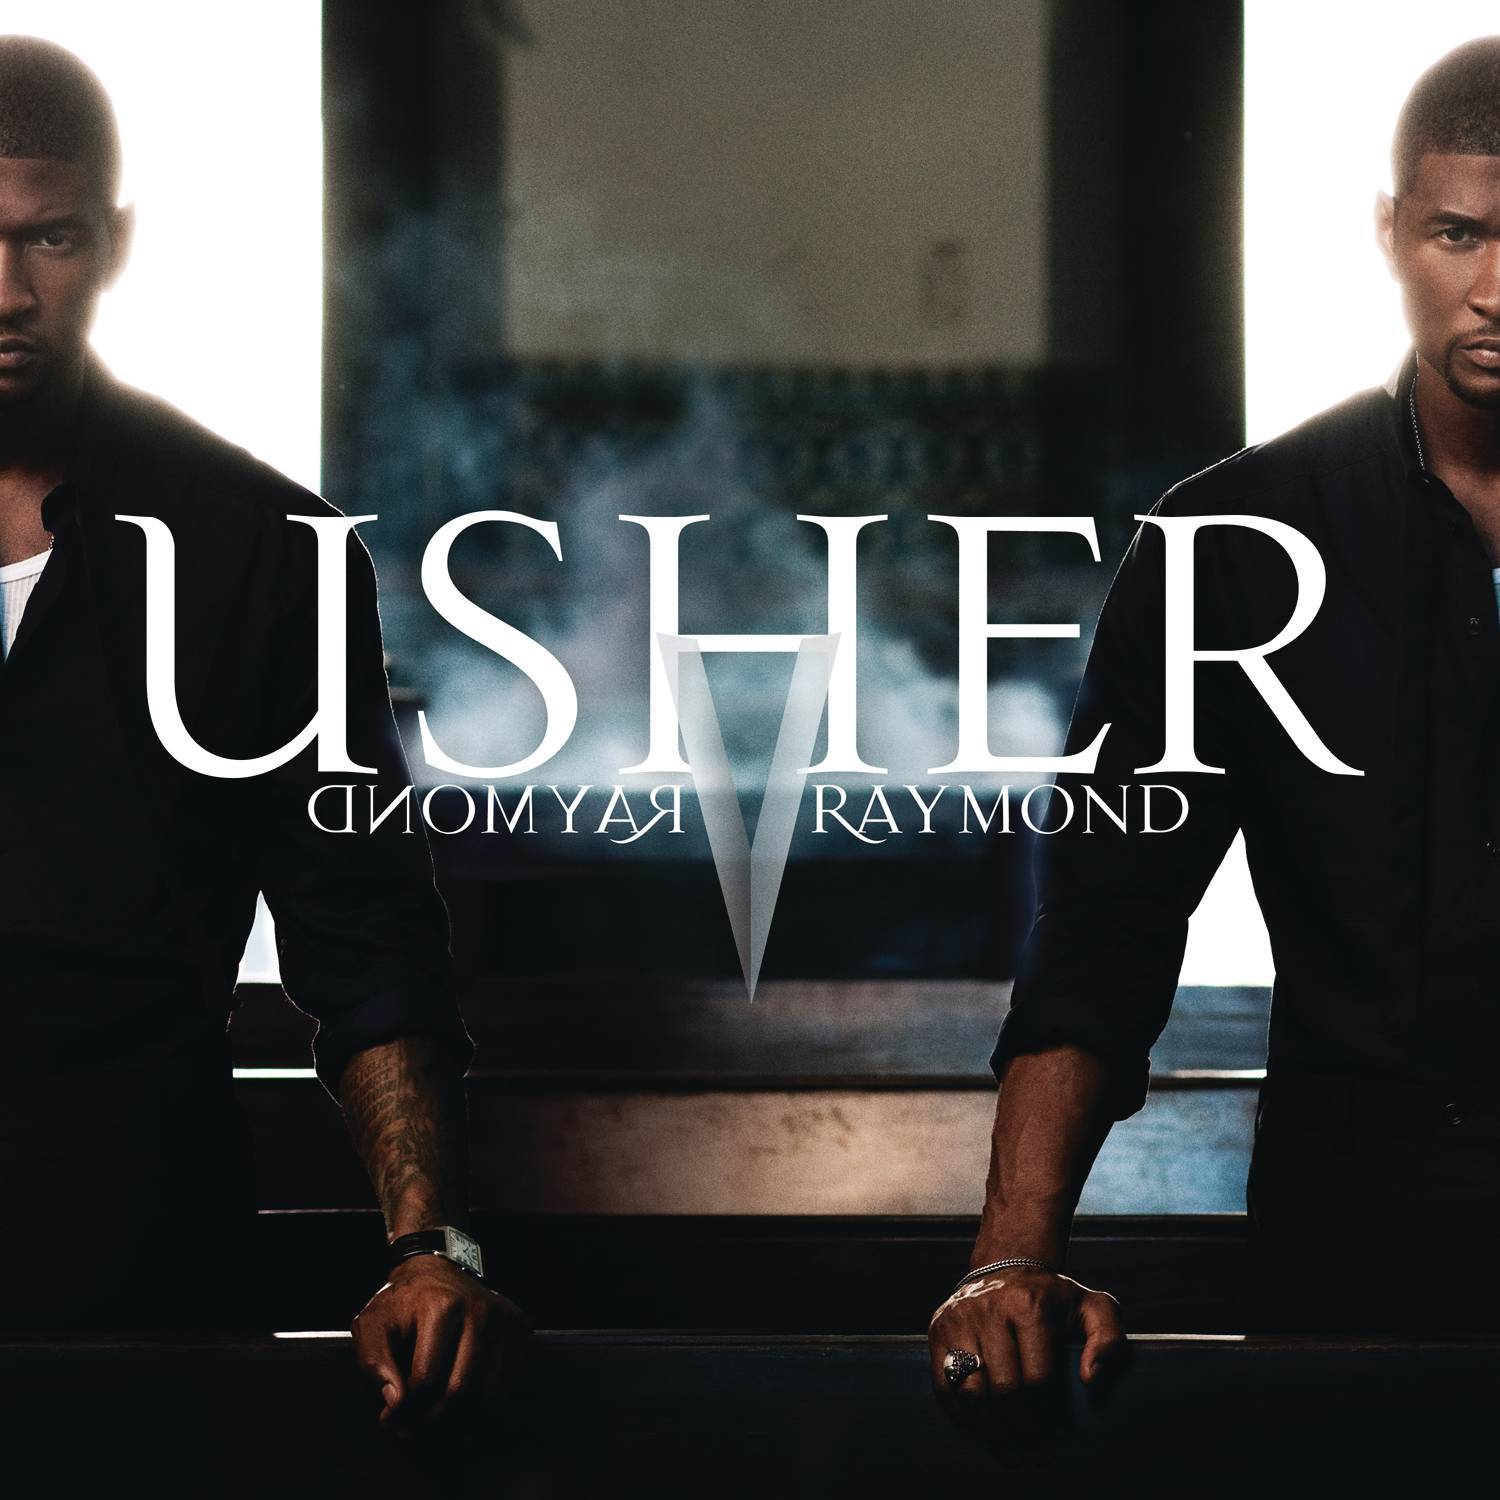 Papers歌词 歌手Usher-专辑Raymond v Raymond-单曲《Papers》LRC歌词下载